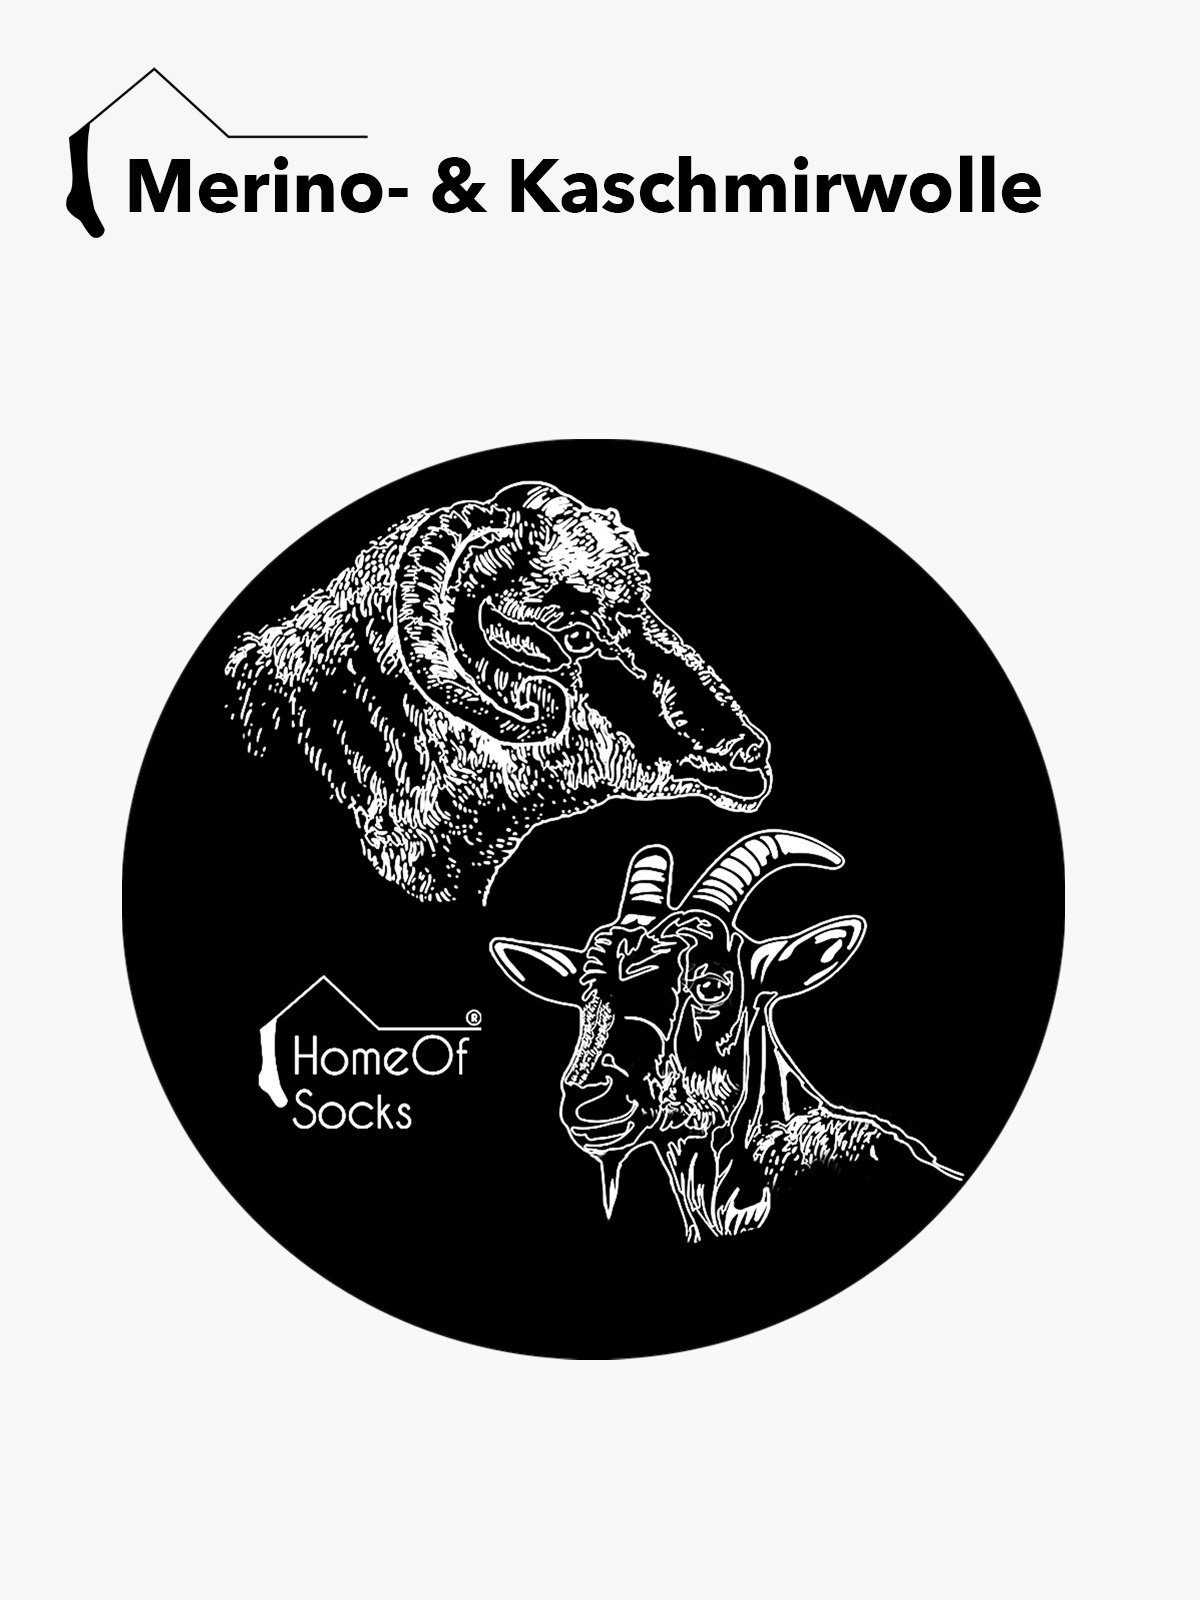 HomeOfSocks Kniestrümpfe Merino Kaschmir Kniestrumpf und Merino- Luxuriöse Grau Weich Extra Kniestrümpfe Wollsocken mit Kashmirwolle